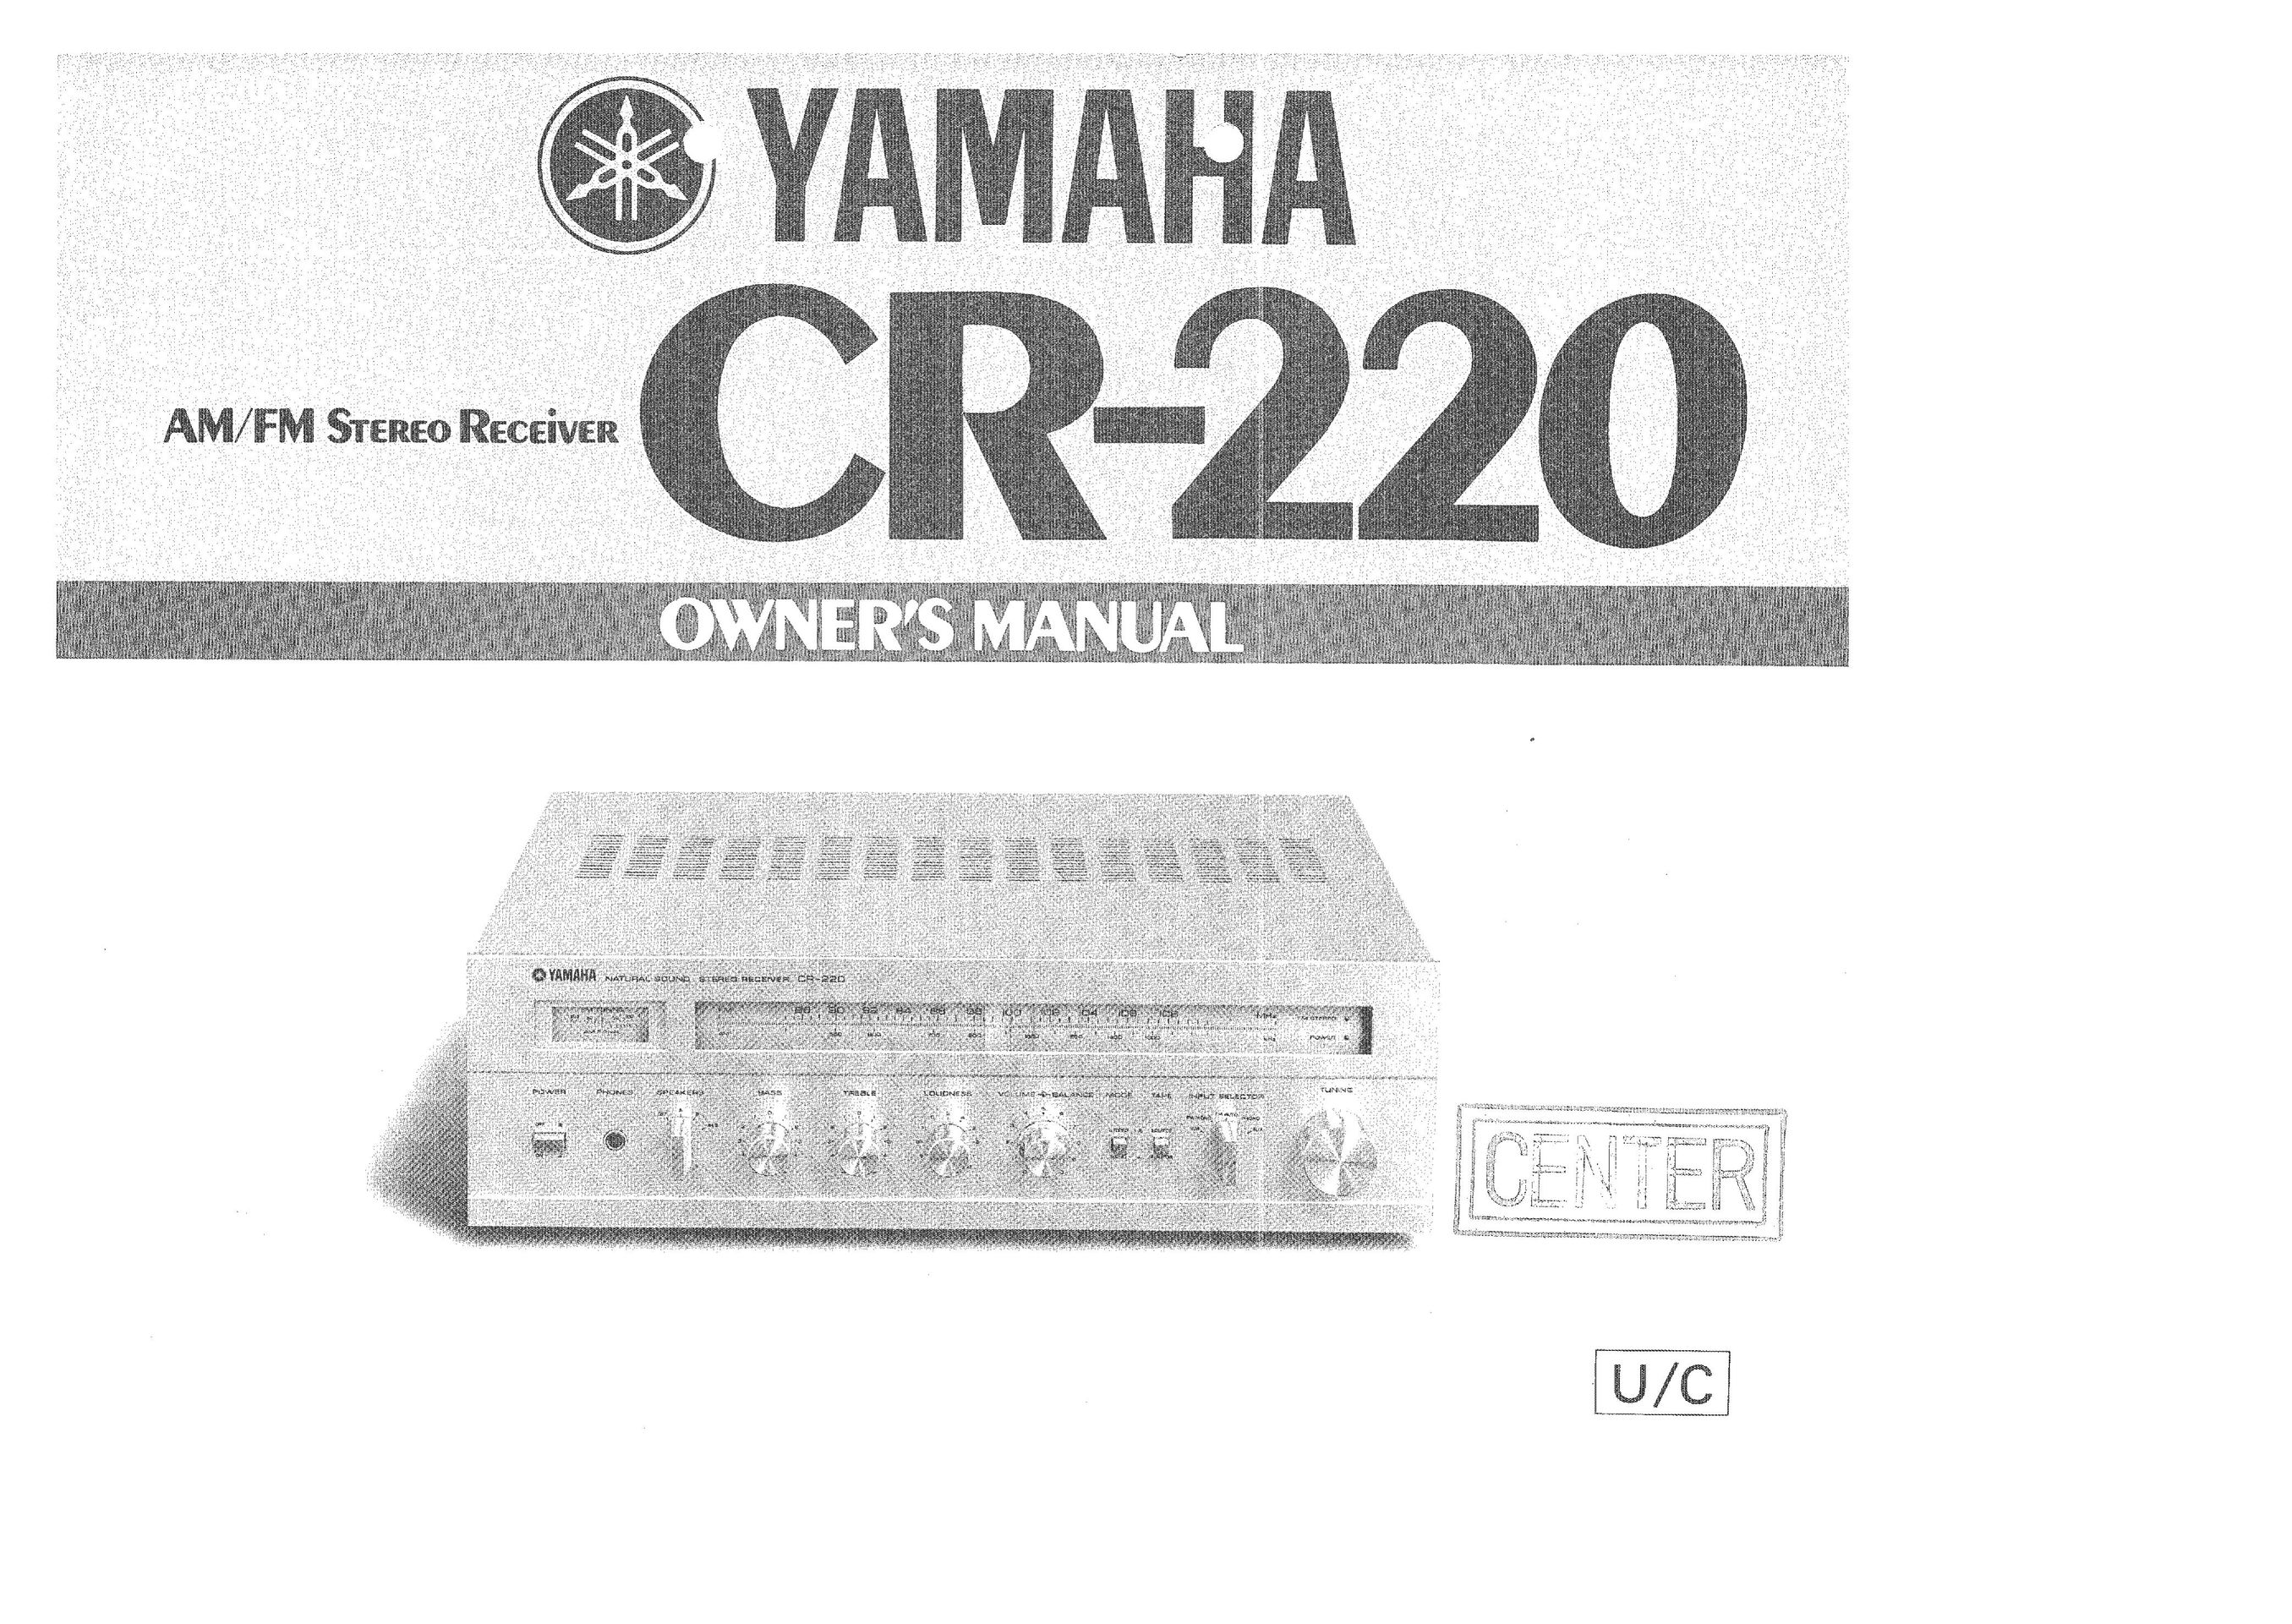 Yamaha cr-220 Stereo Receiver User Manual